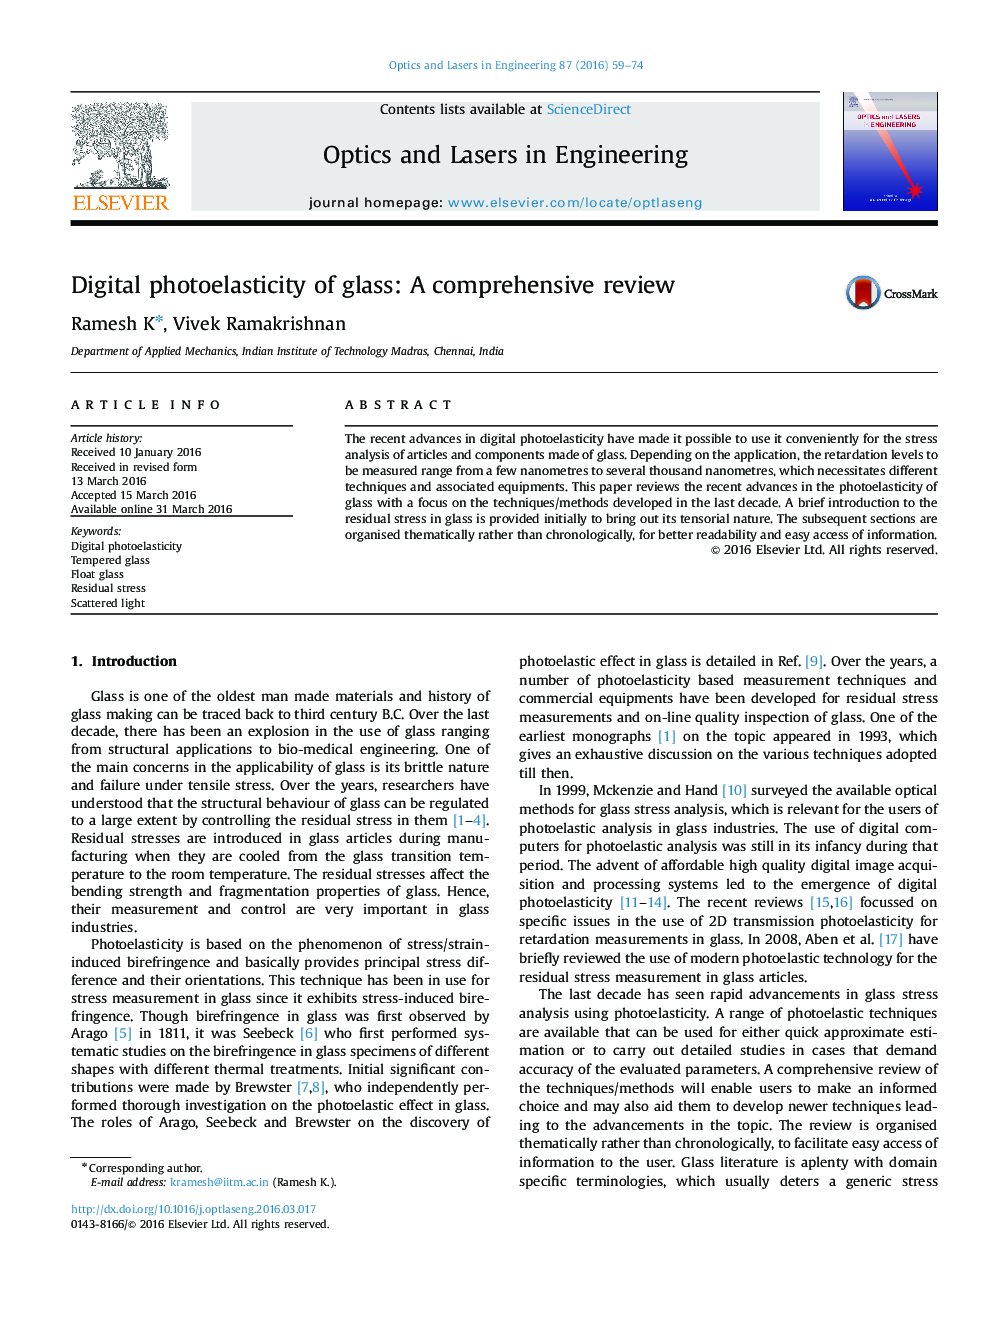 Digital photoelasticity of glass: A comprehensive review